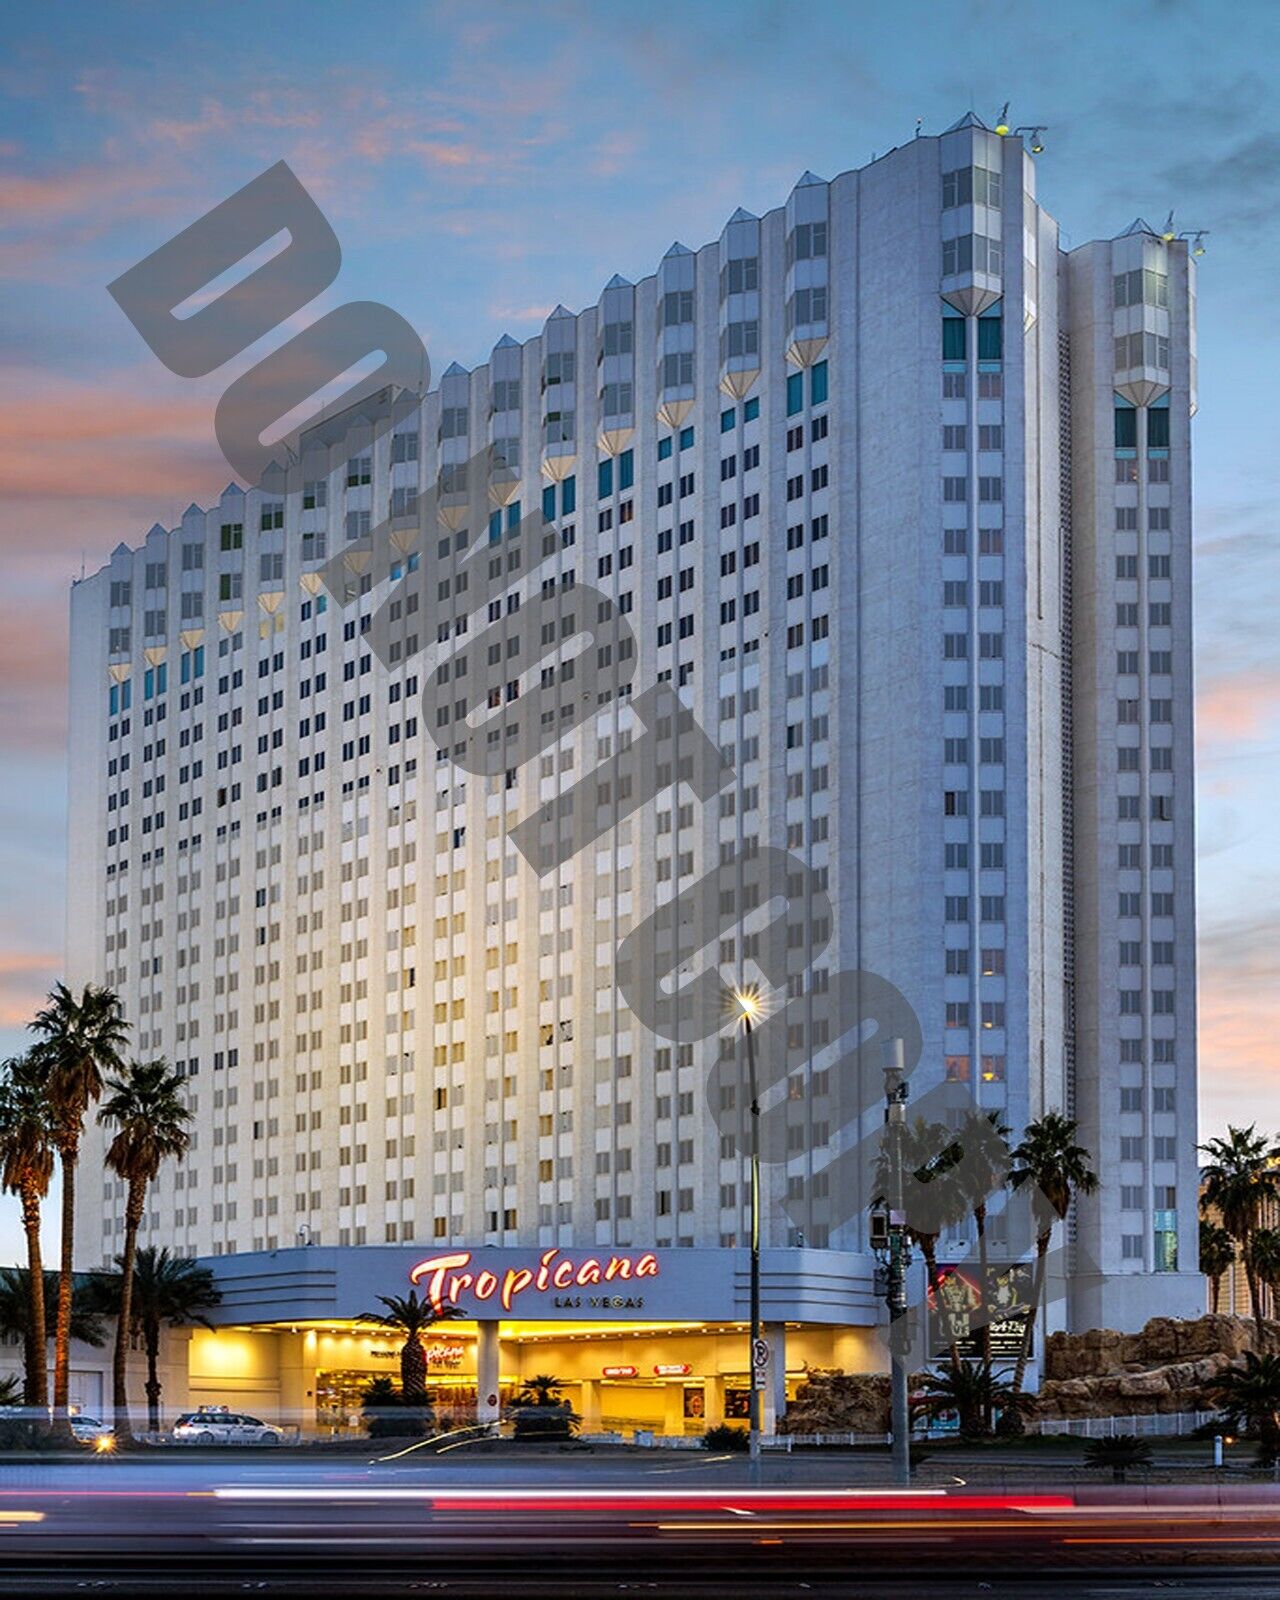 Tropicana Hotel Casino Las Vegas Nevada Signage Exterior Day View 8x10 Photo